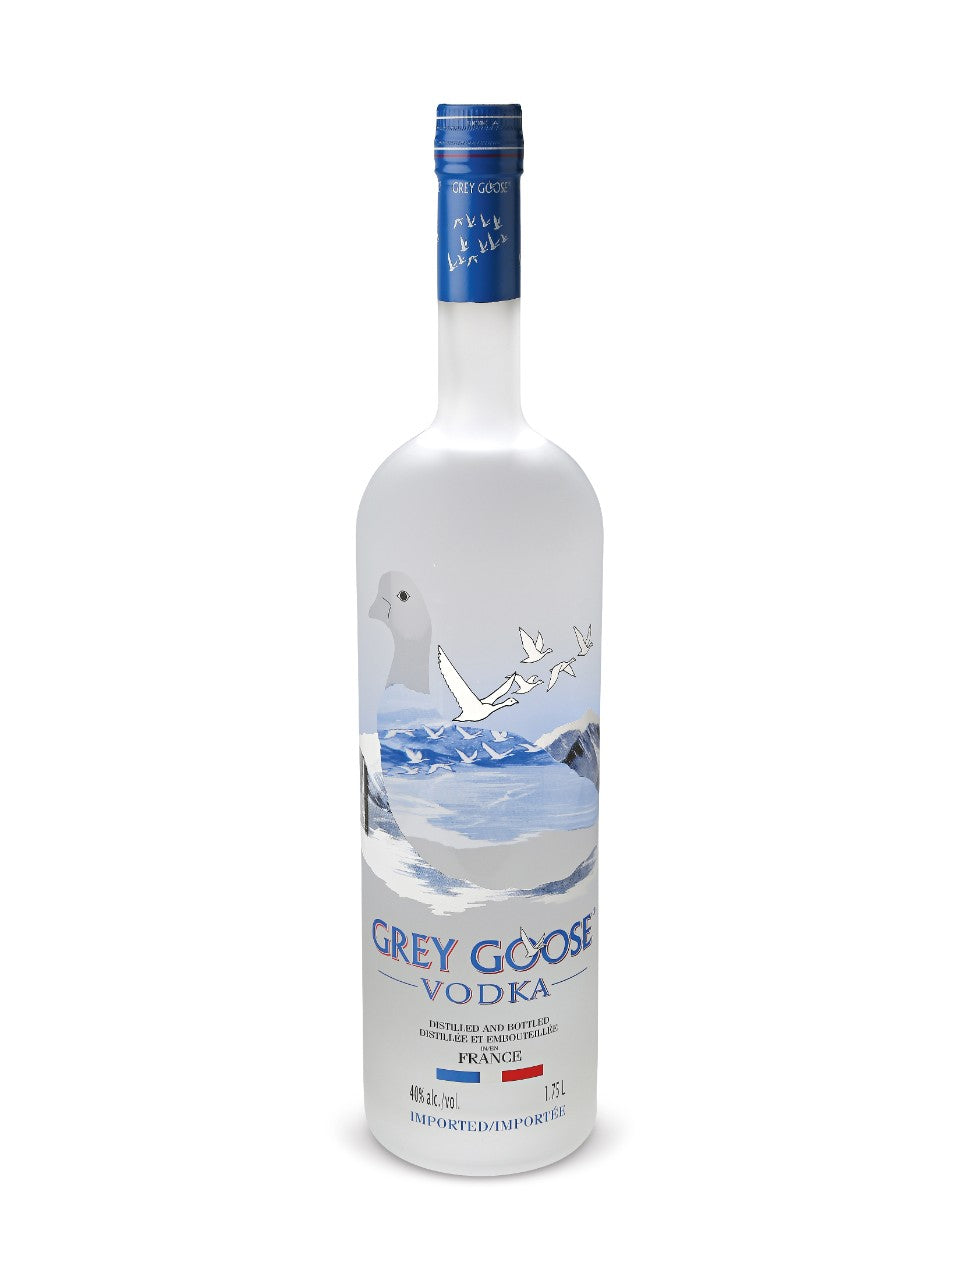 Grey Goose Vodka 1750 mL bottle